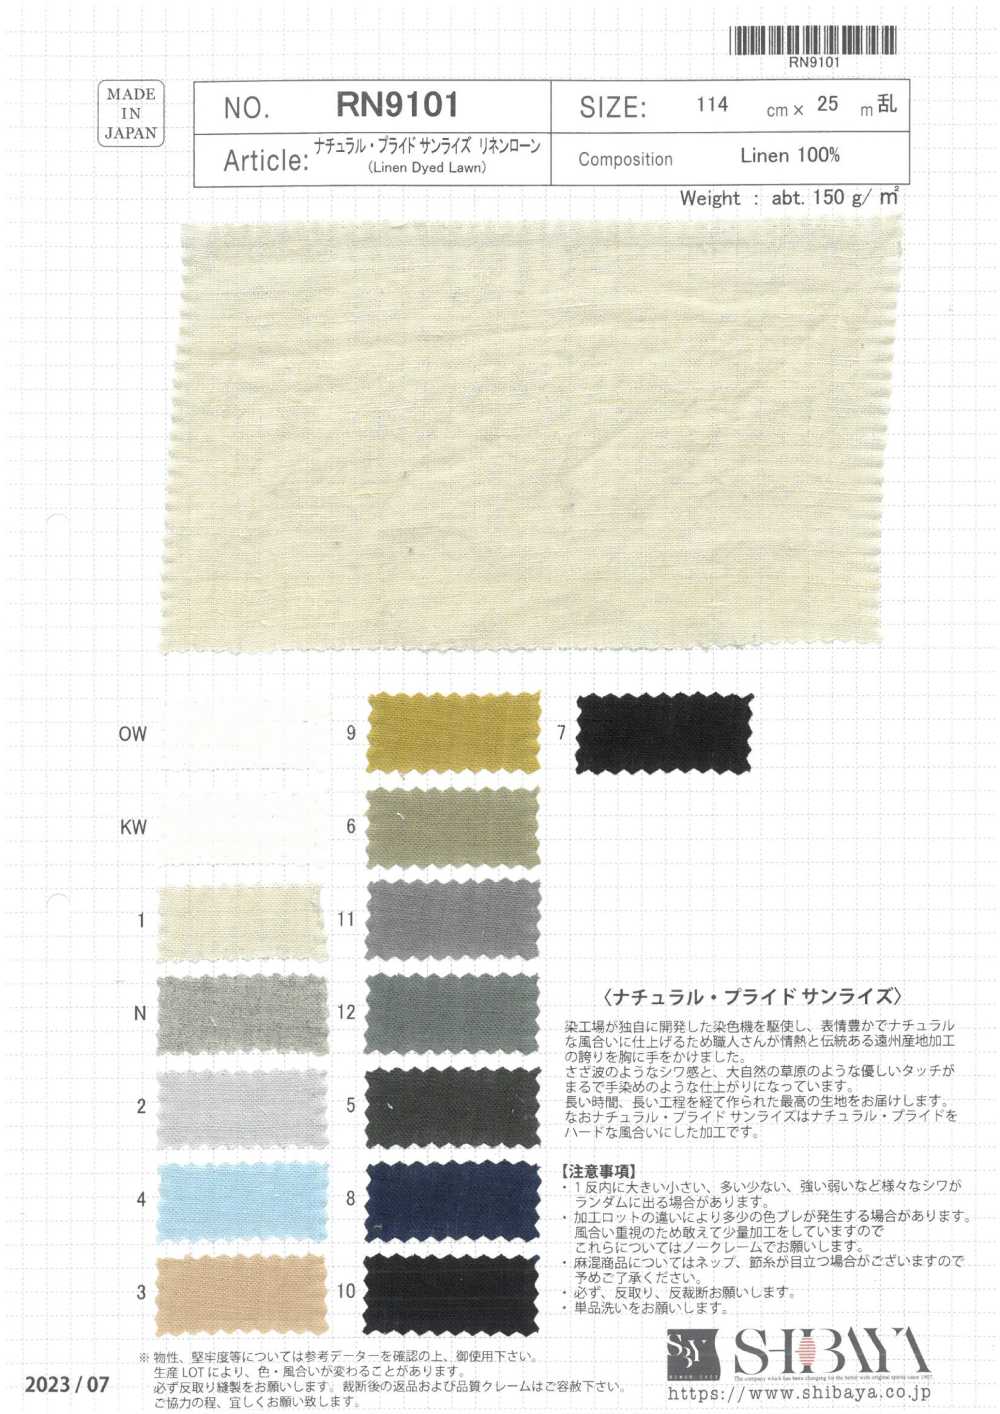 RN9101 Natural Pride Sunrise Leinenrasen[Textilgewebe] SHIBAYA